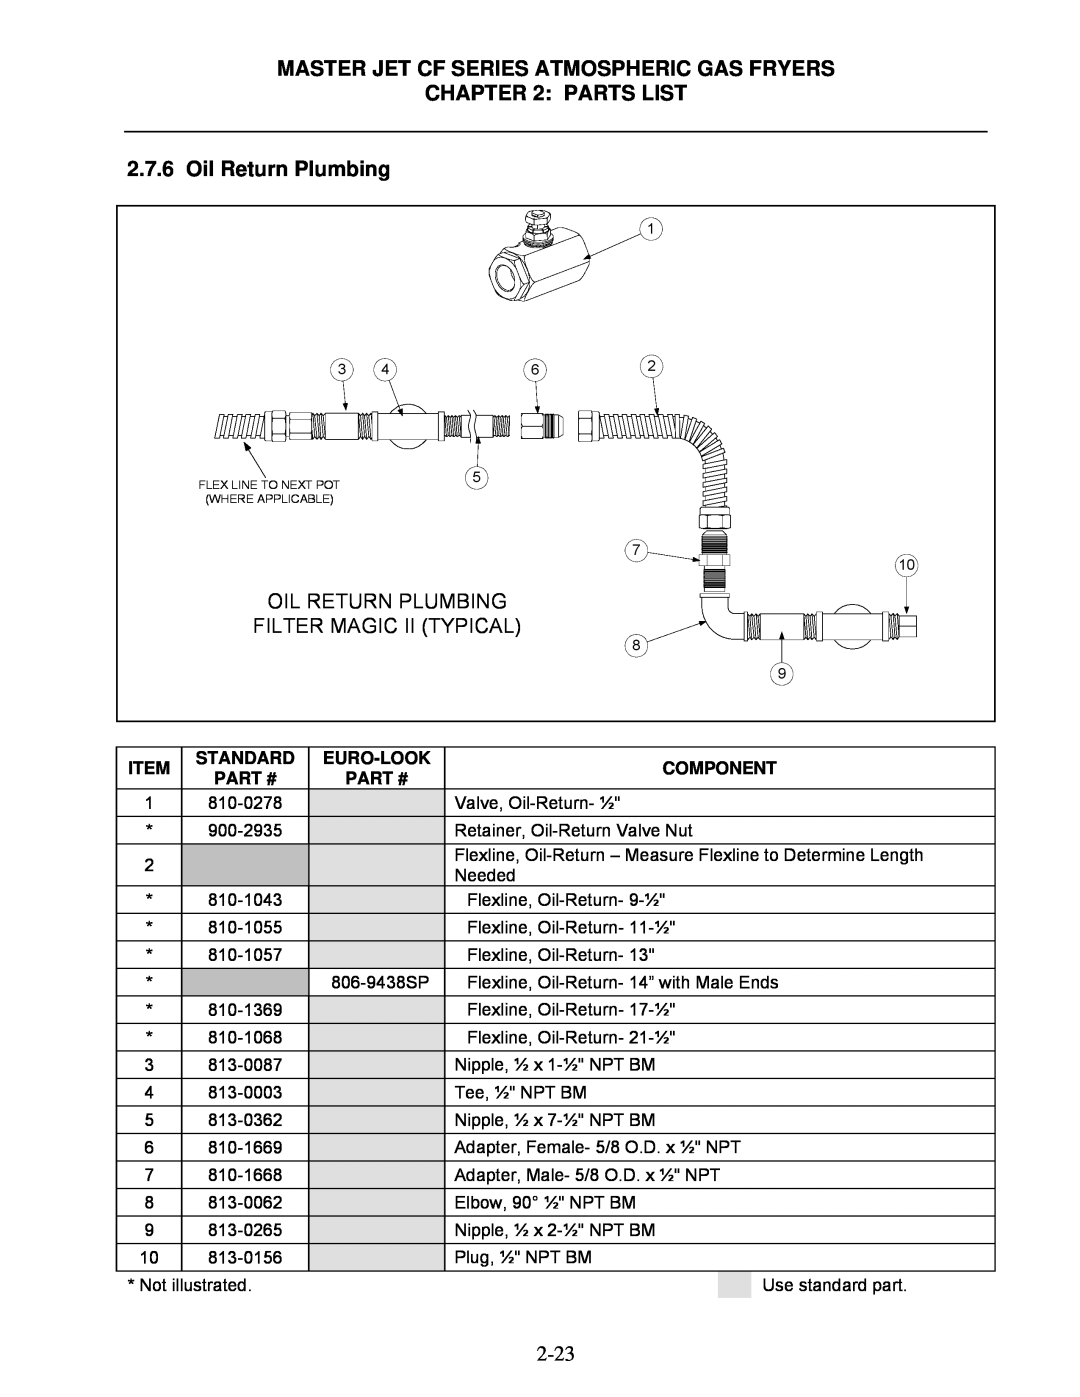 Frymaster KJ3FC, MJCF Oil Return Plumbing, Filter Magic Ii Typical, Master Jet Cf Series Atmospheric Gas Fryers Parts List 